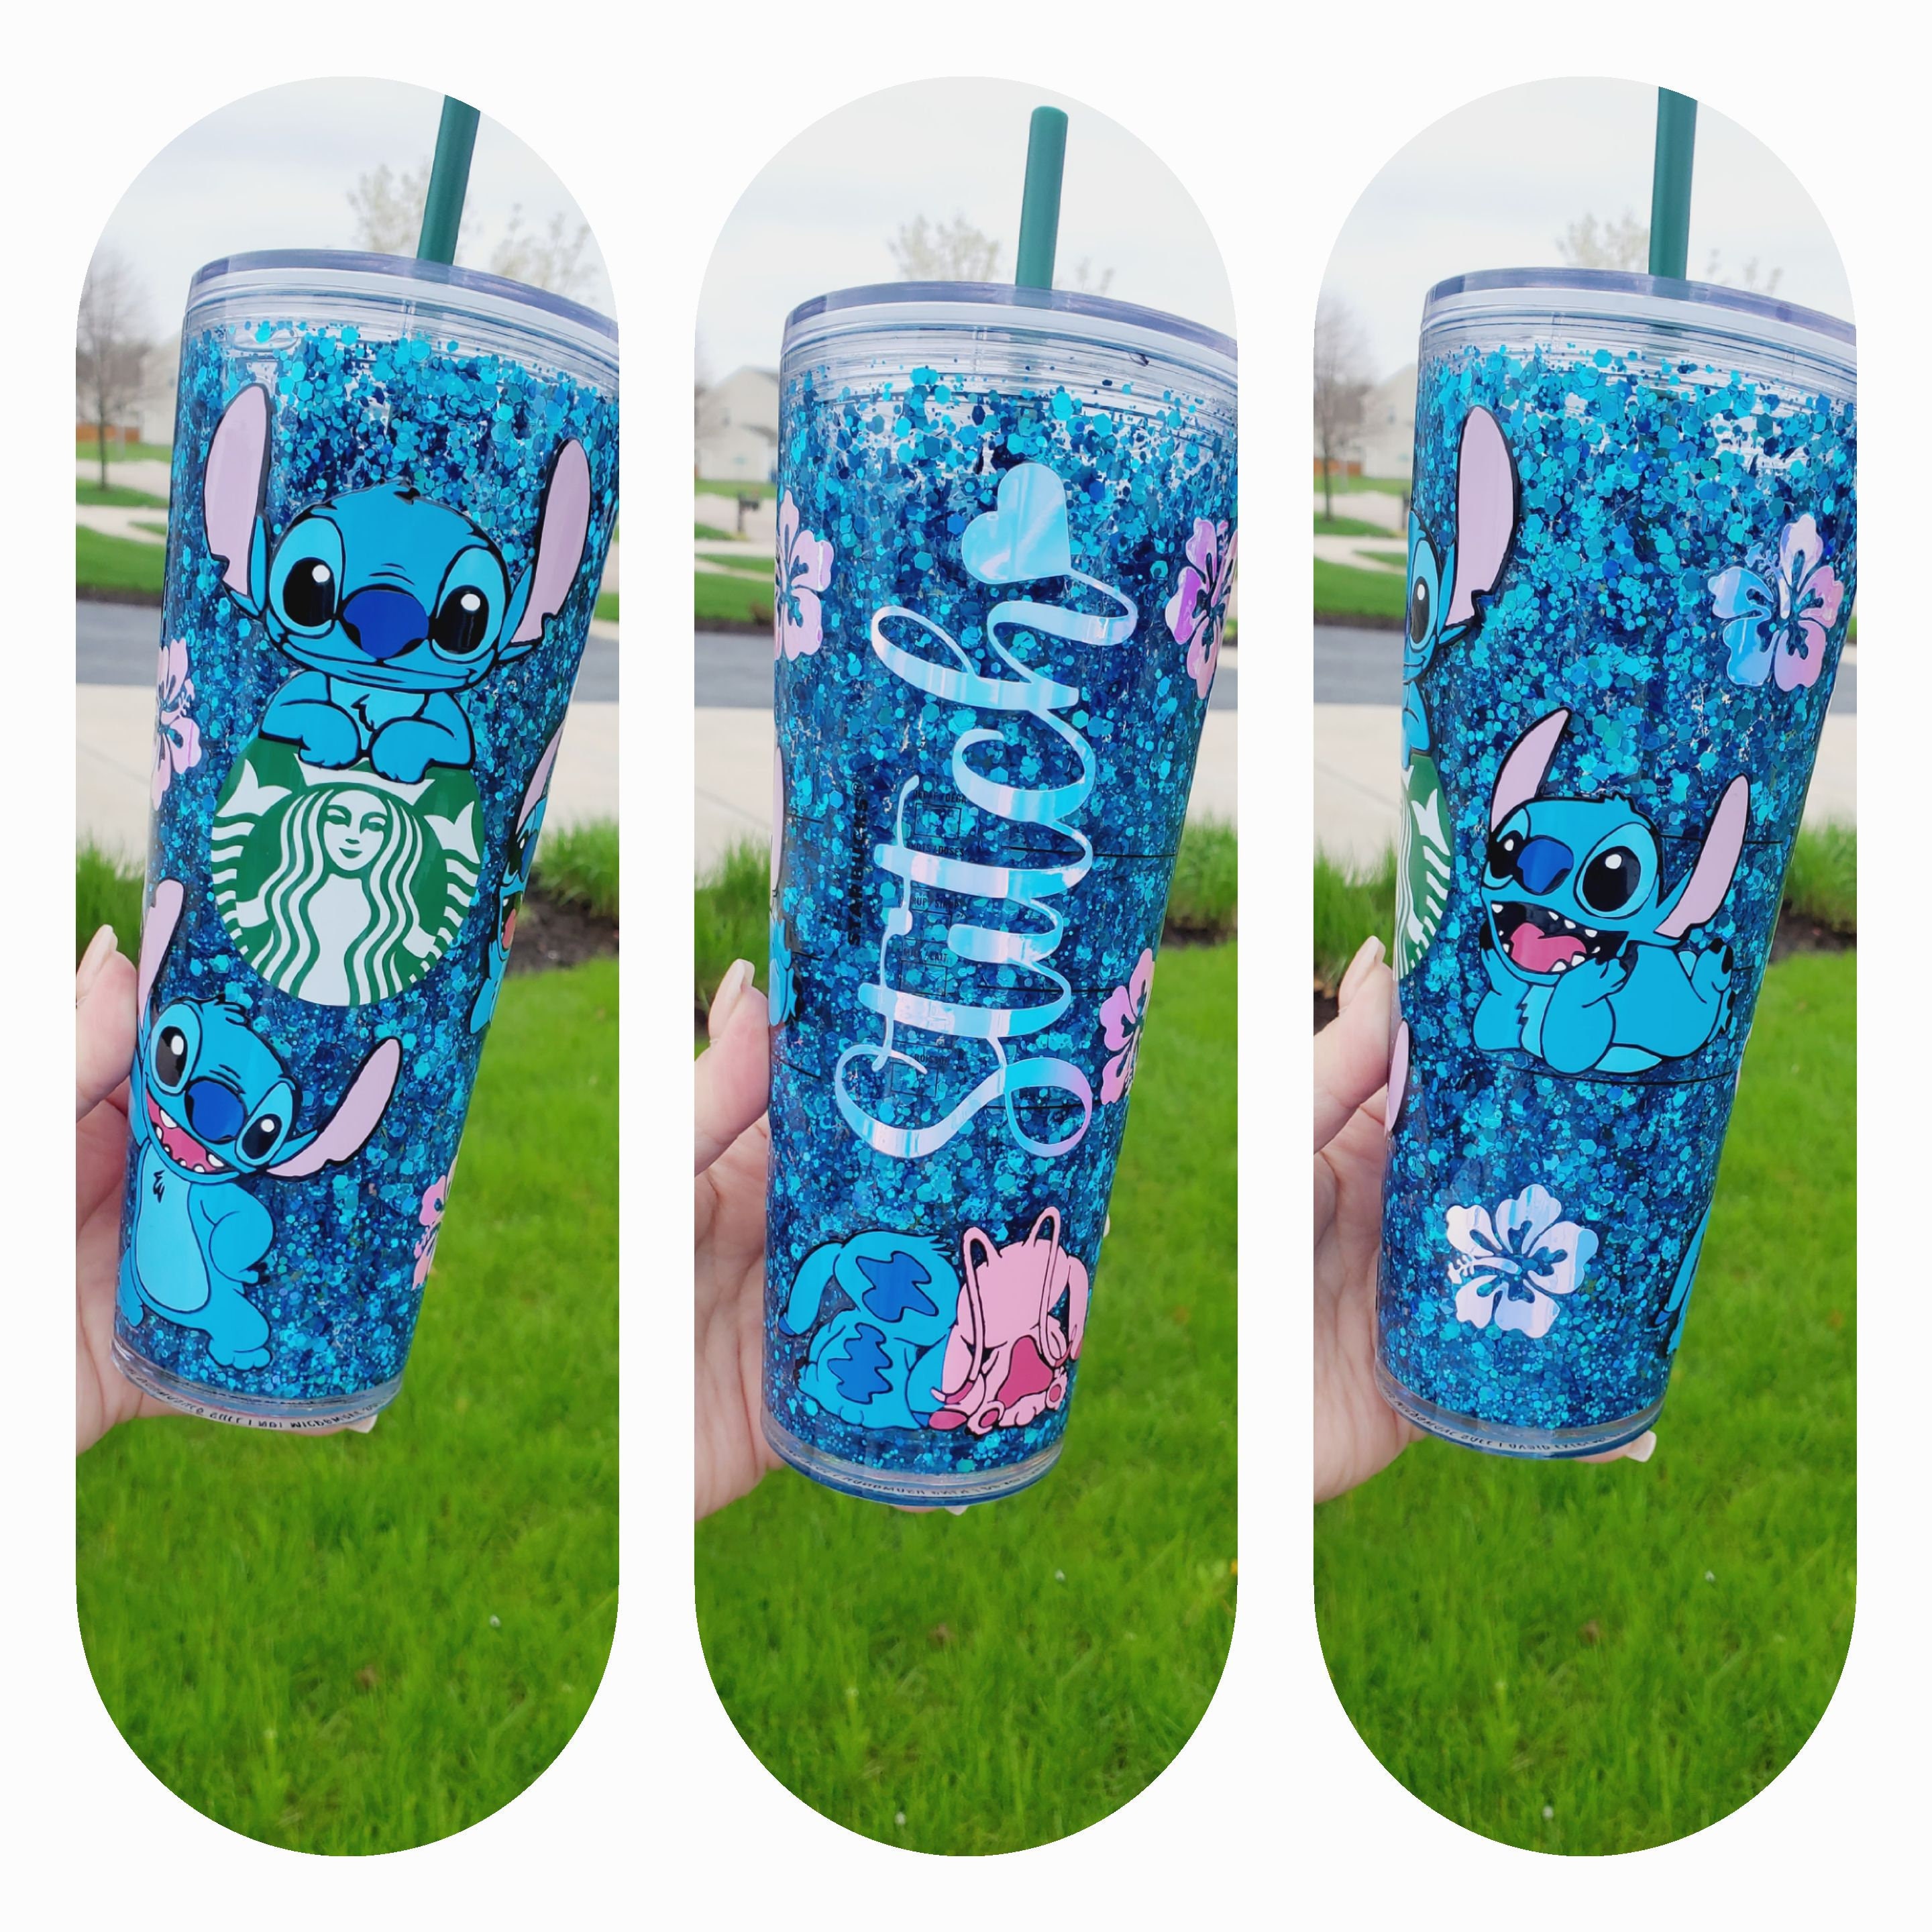 Stitch Starbucks Cup 